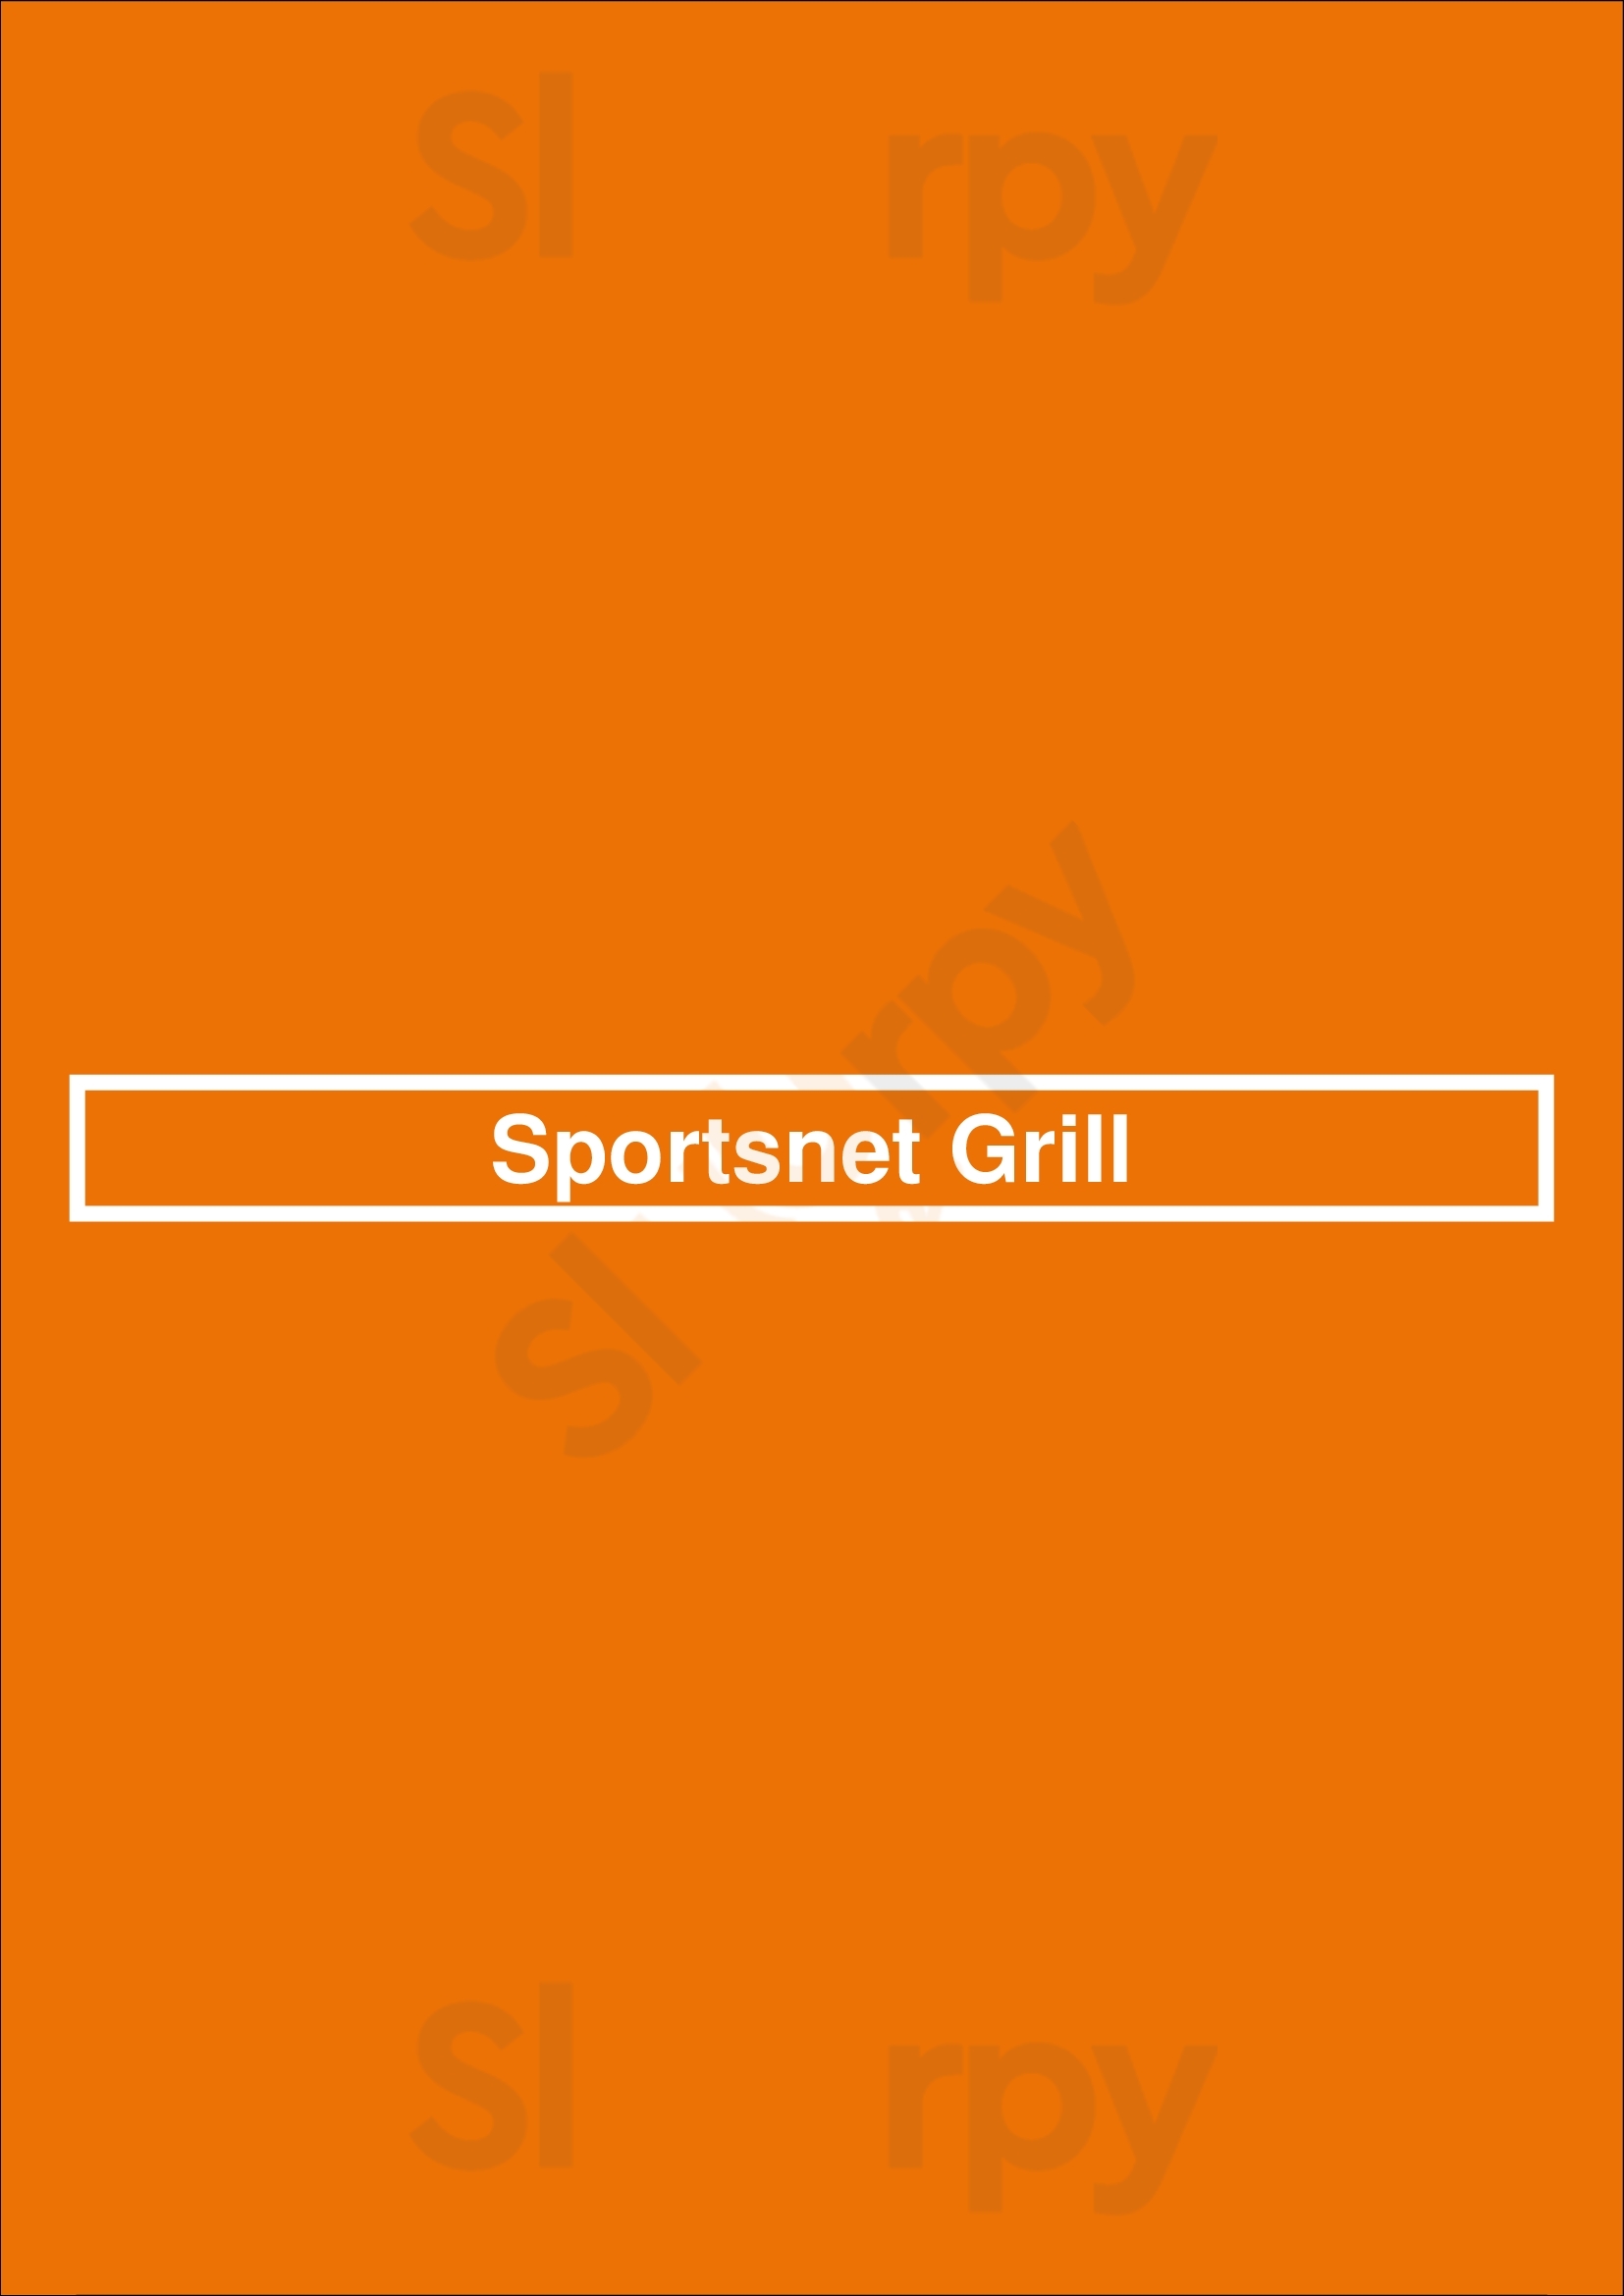 Sportsnet Grill Toronto Menu - 1